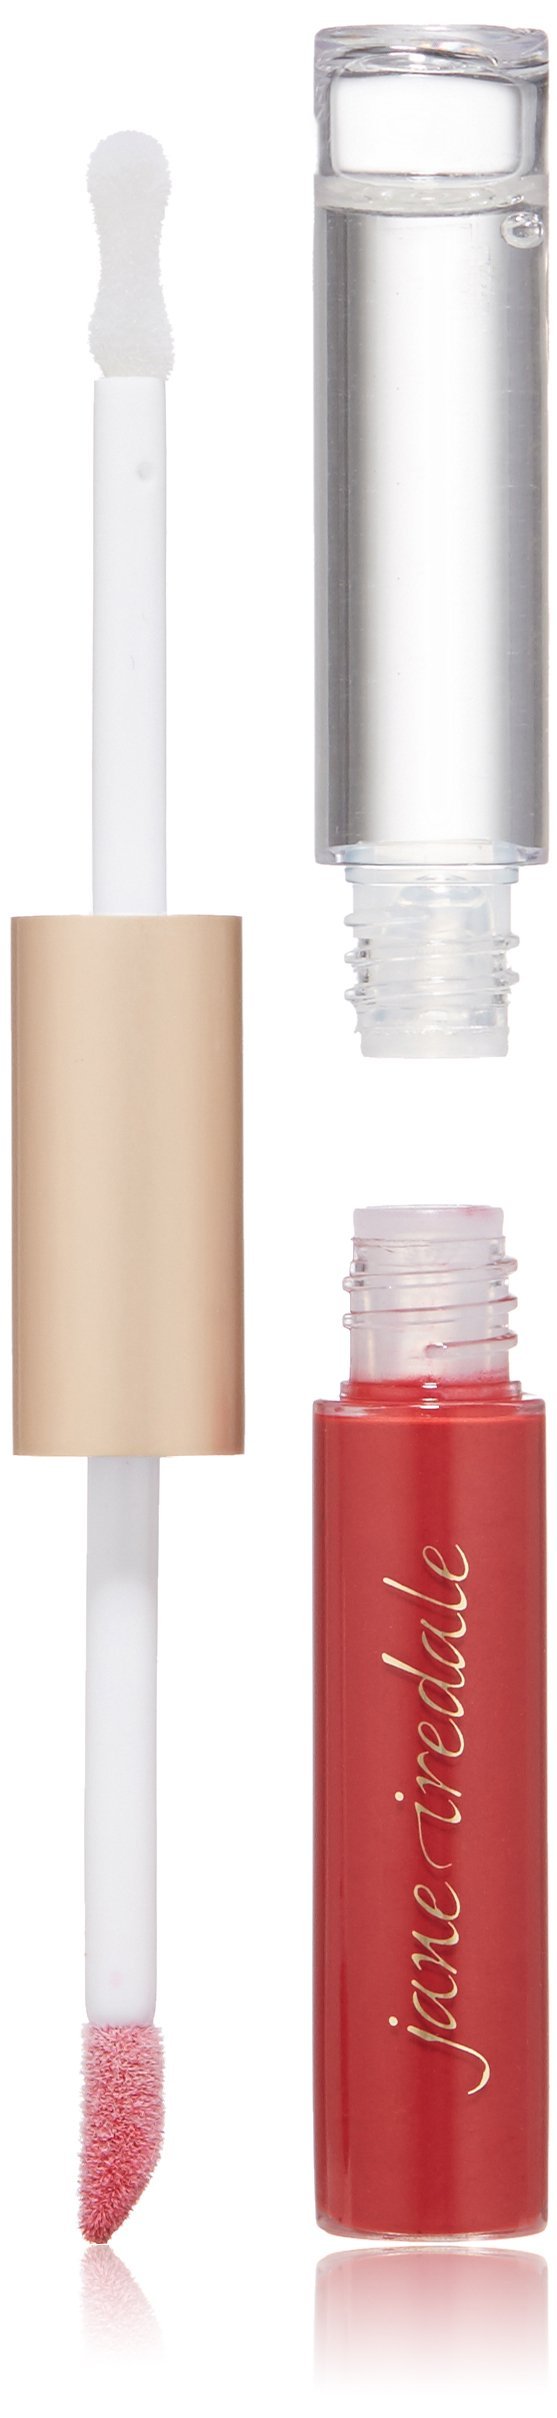 Jane Iredale Lip Fixation Lip Stain & Gloss - Passion 0.2 oz Lip Gloss